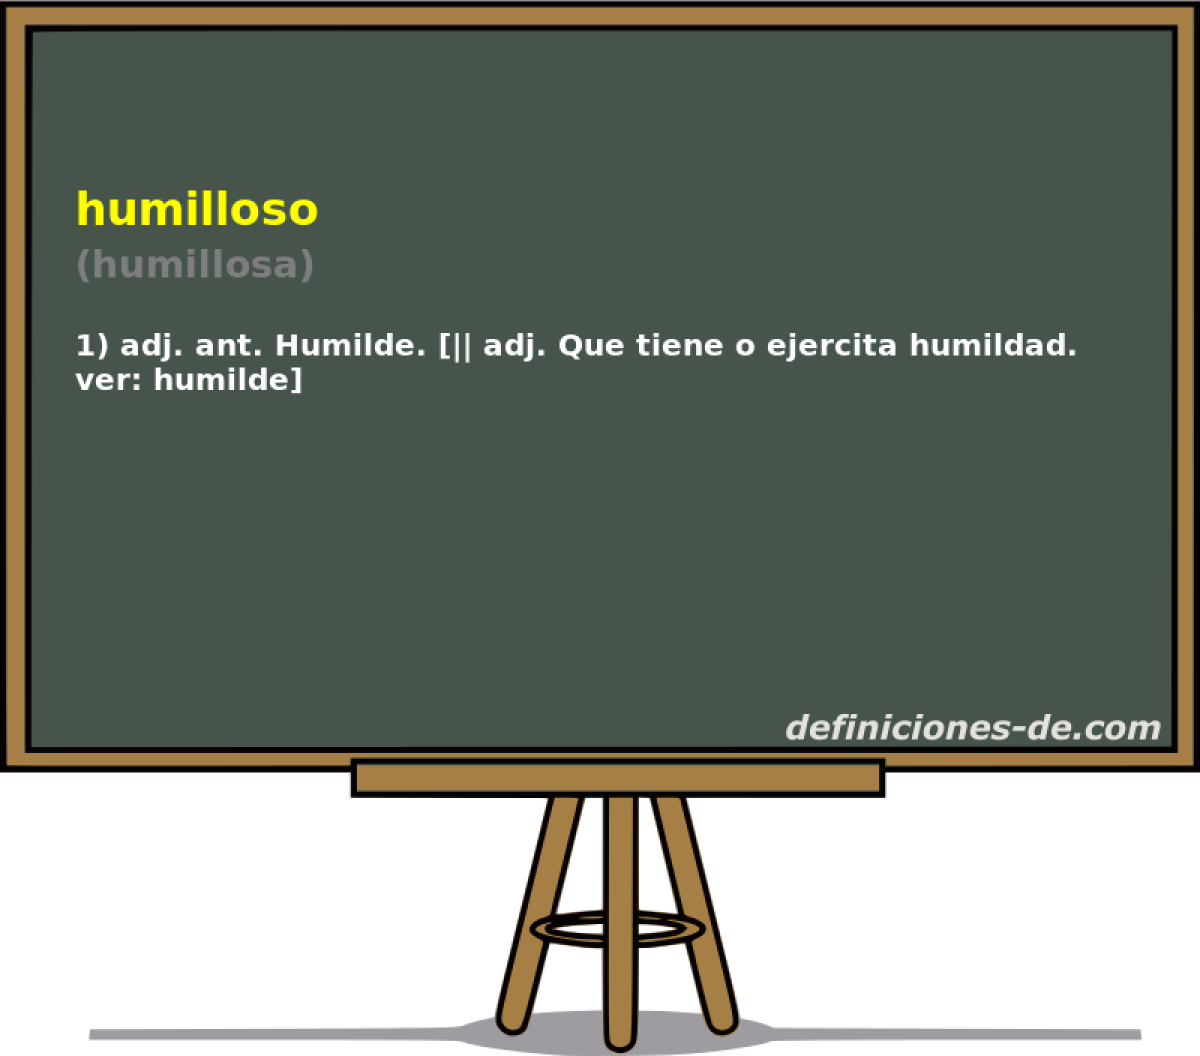 humilloso (humillosa)